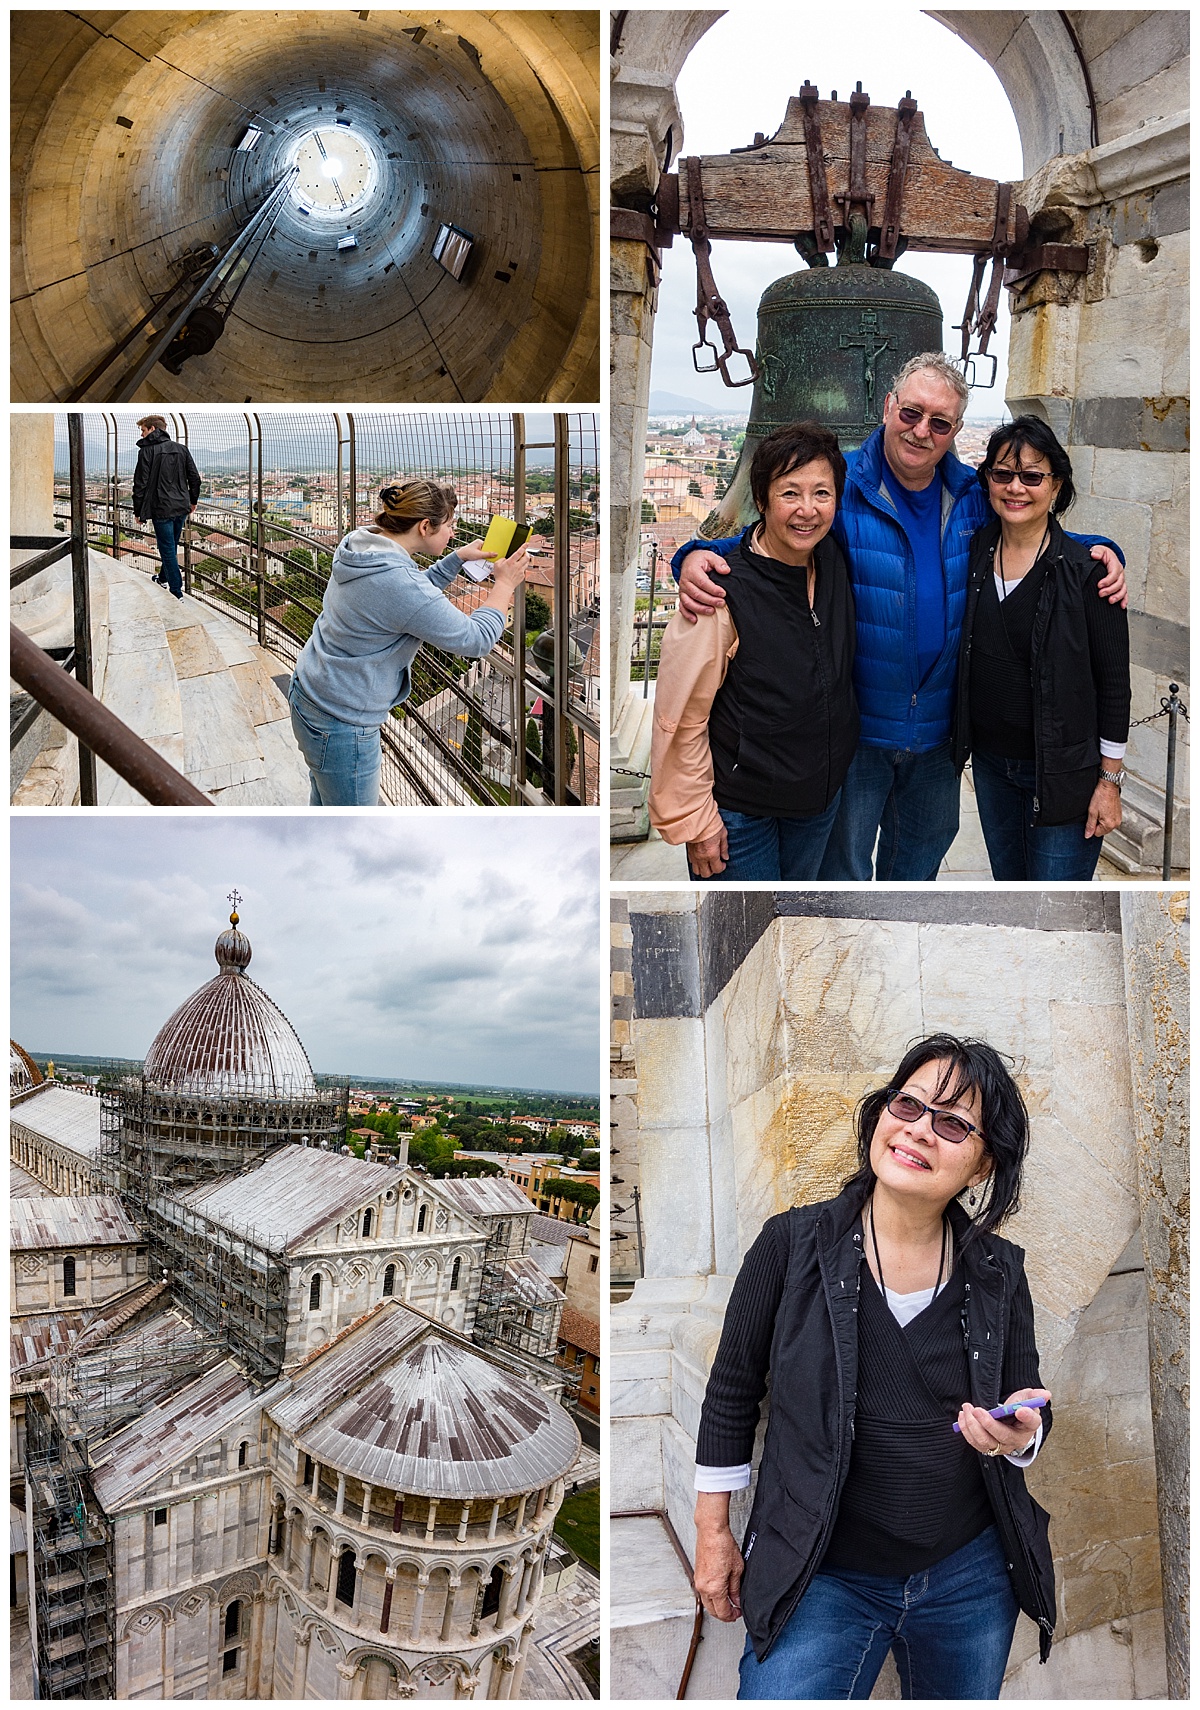 Pisa, Italy - climbing the tower